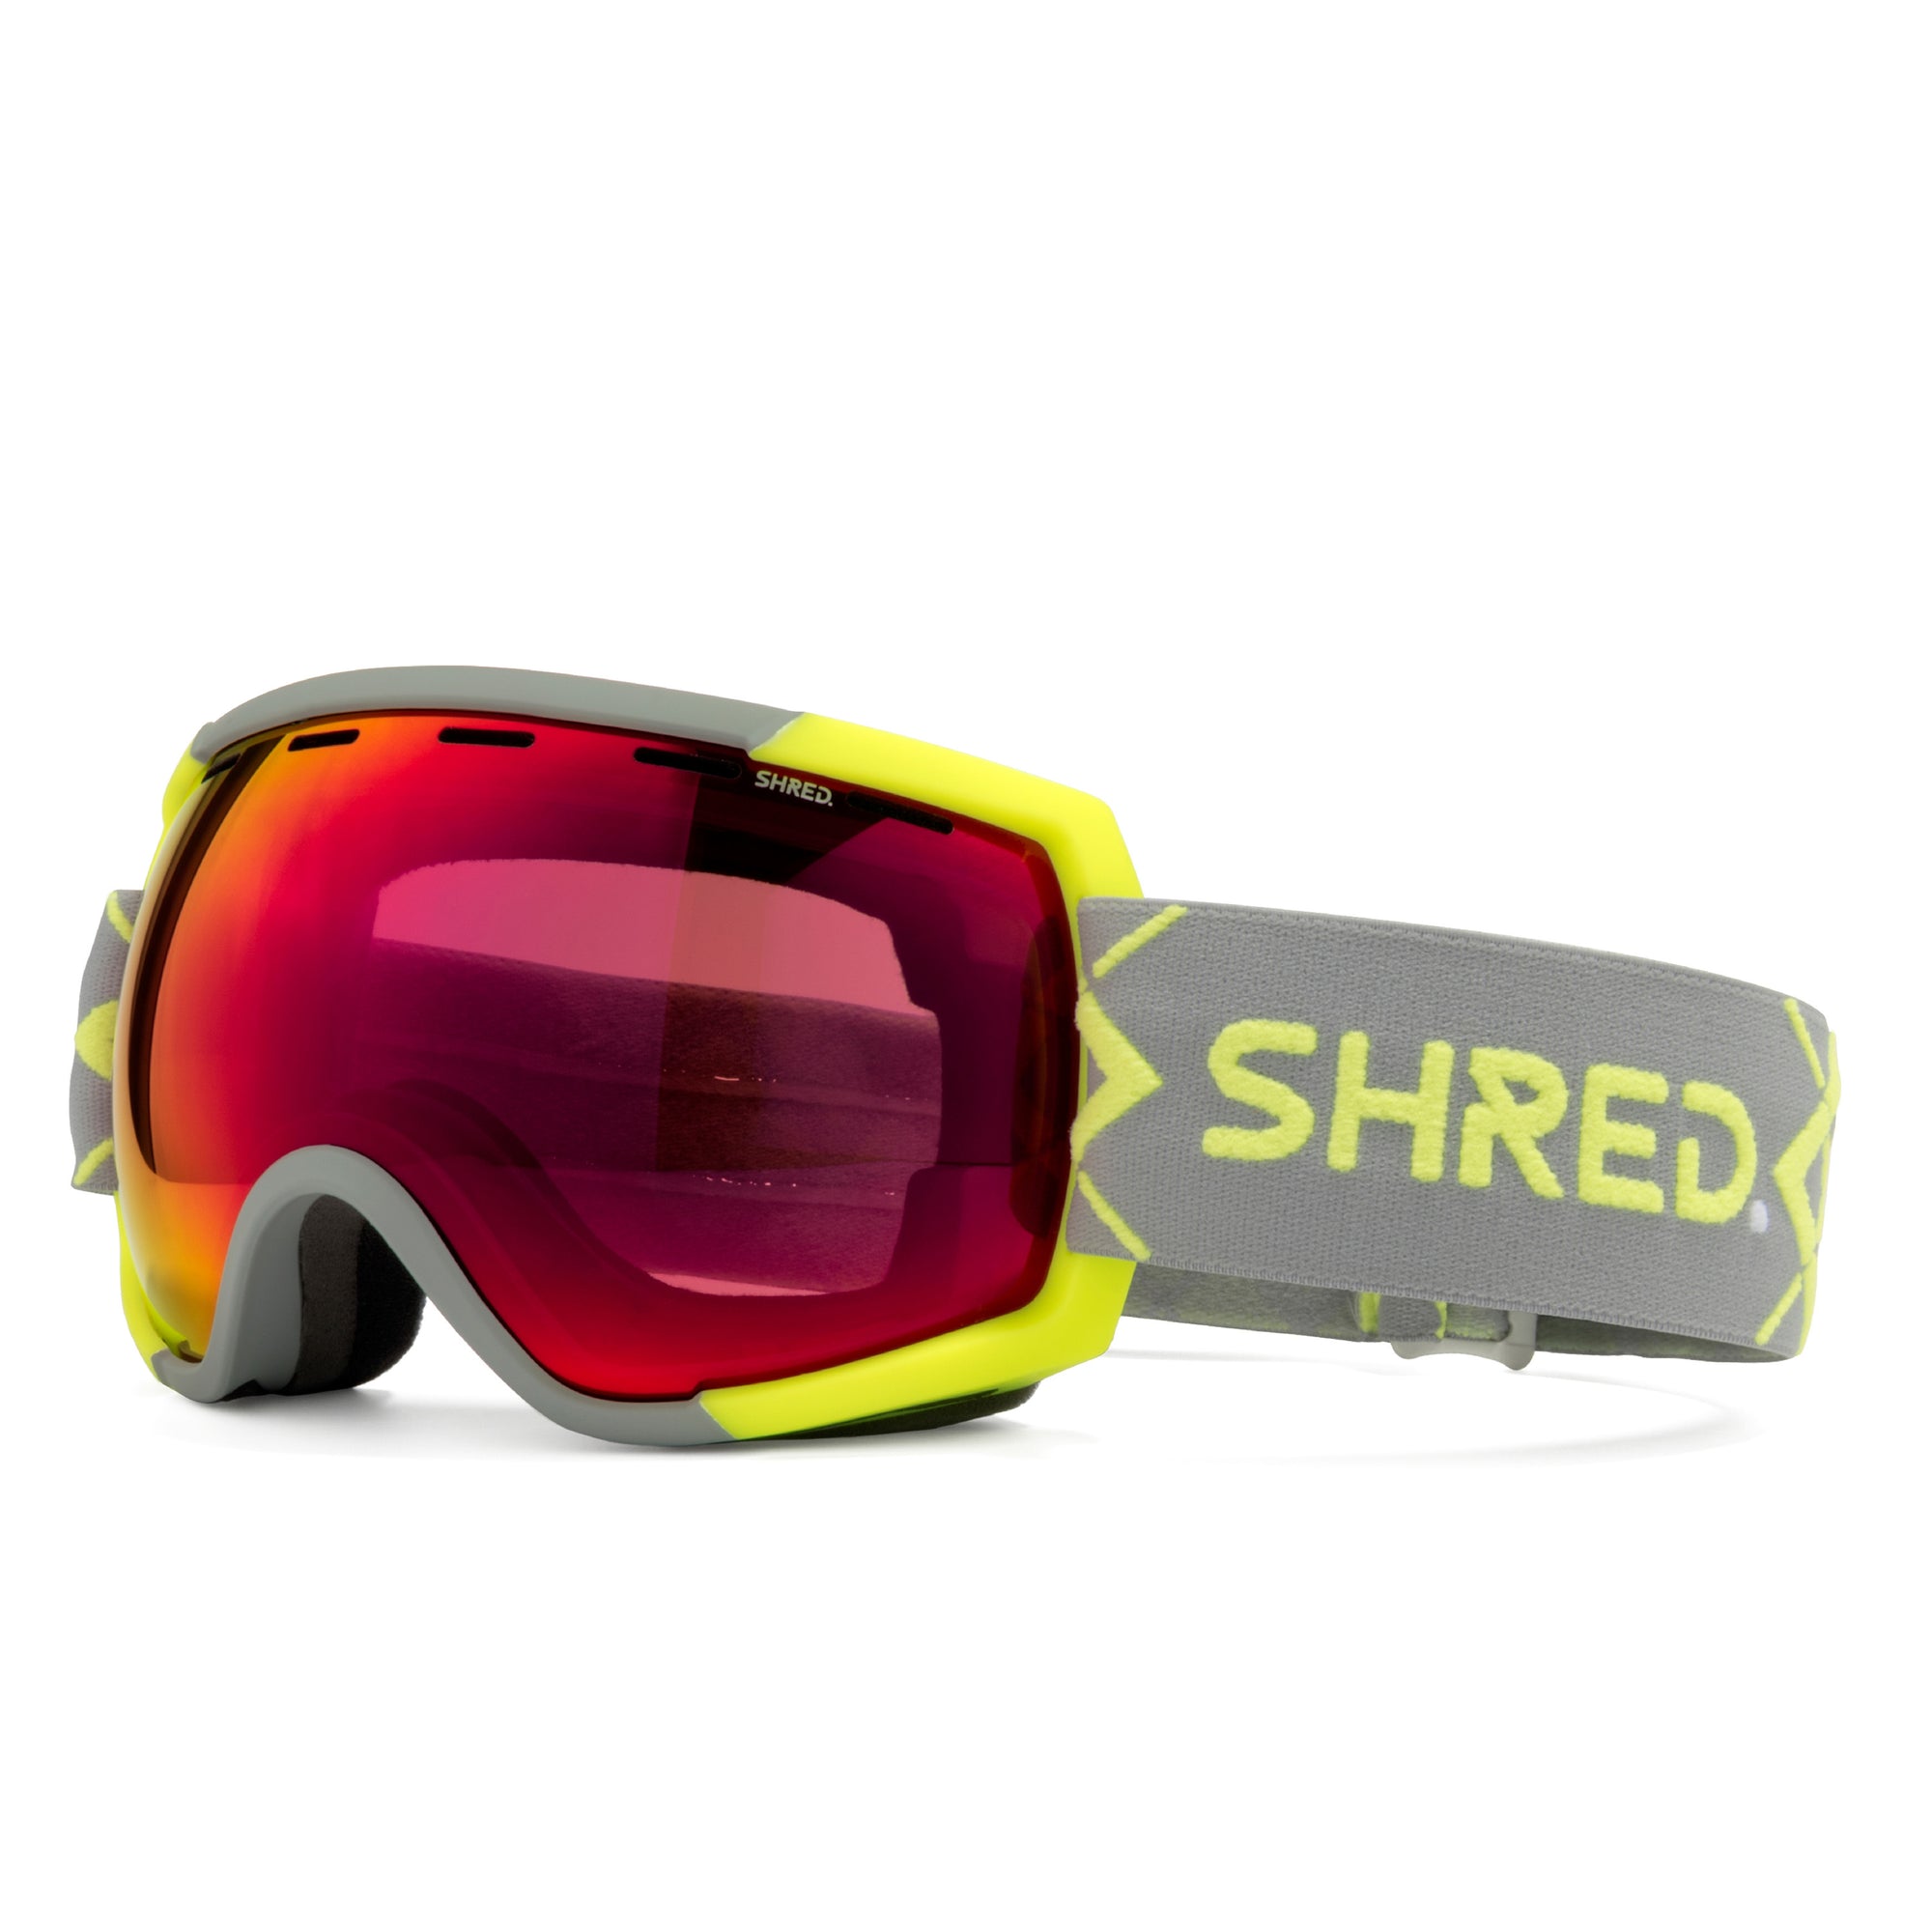 Rarify - Ski Goggles|GORARN35A